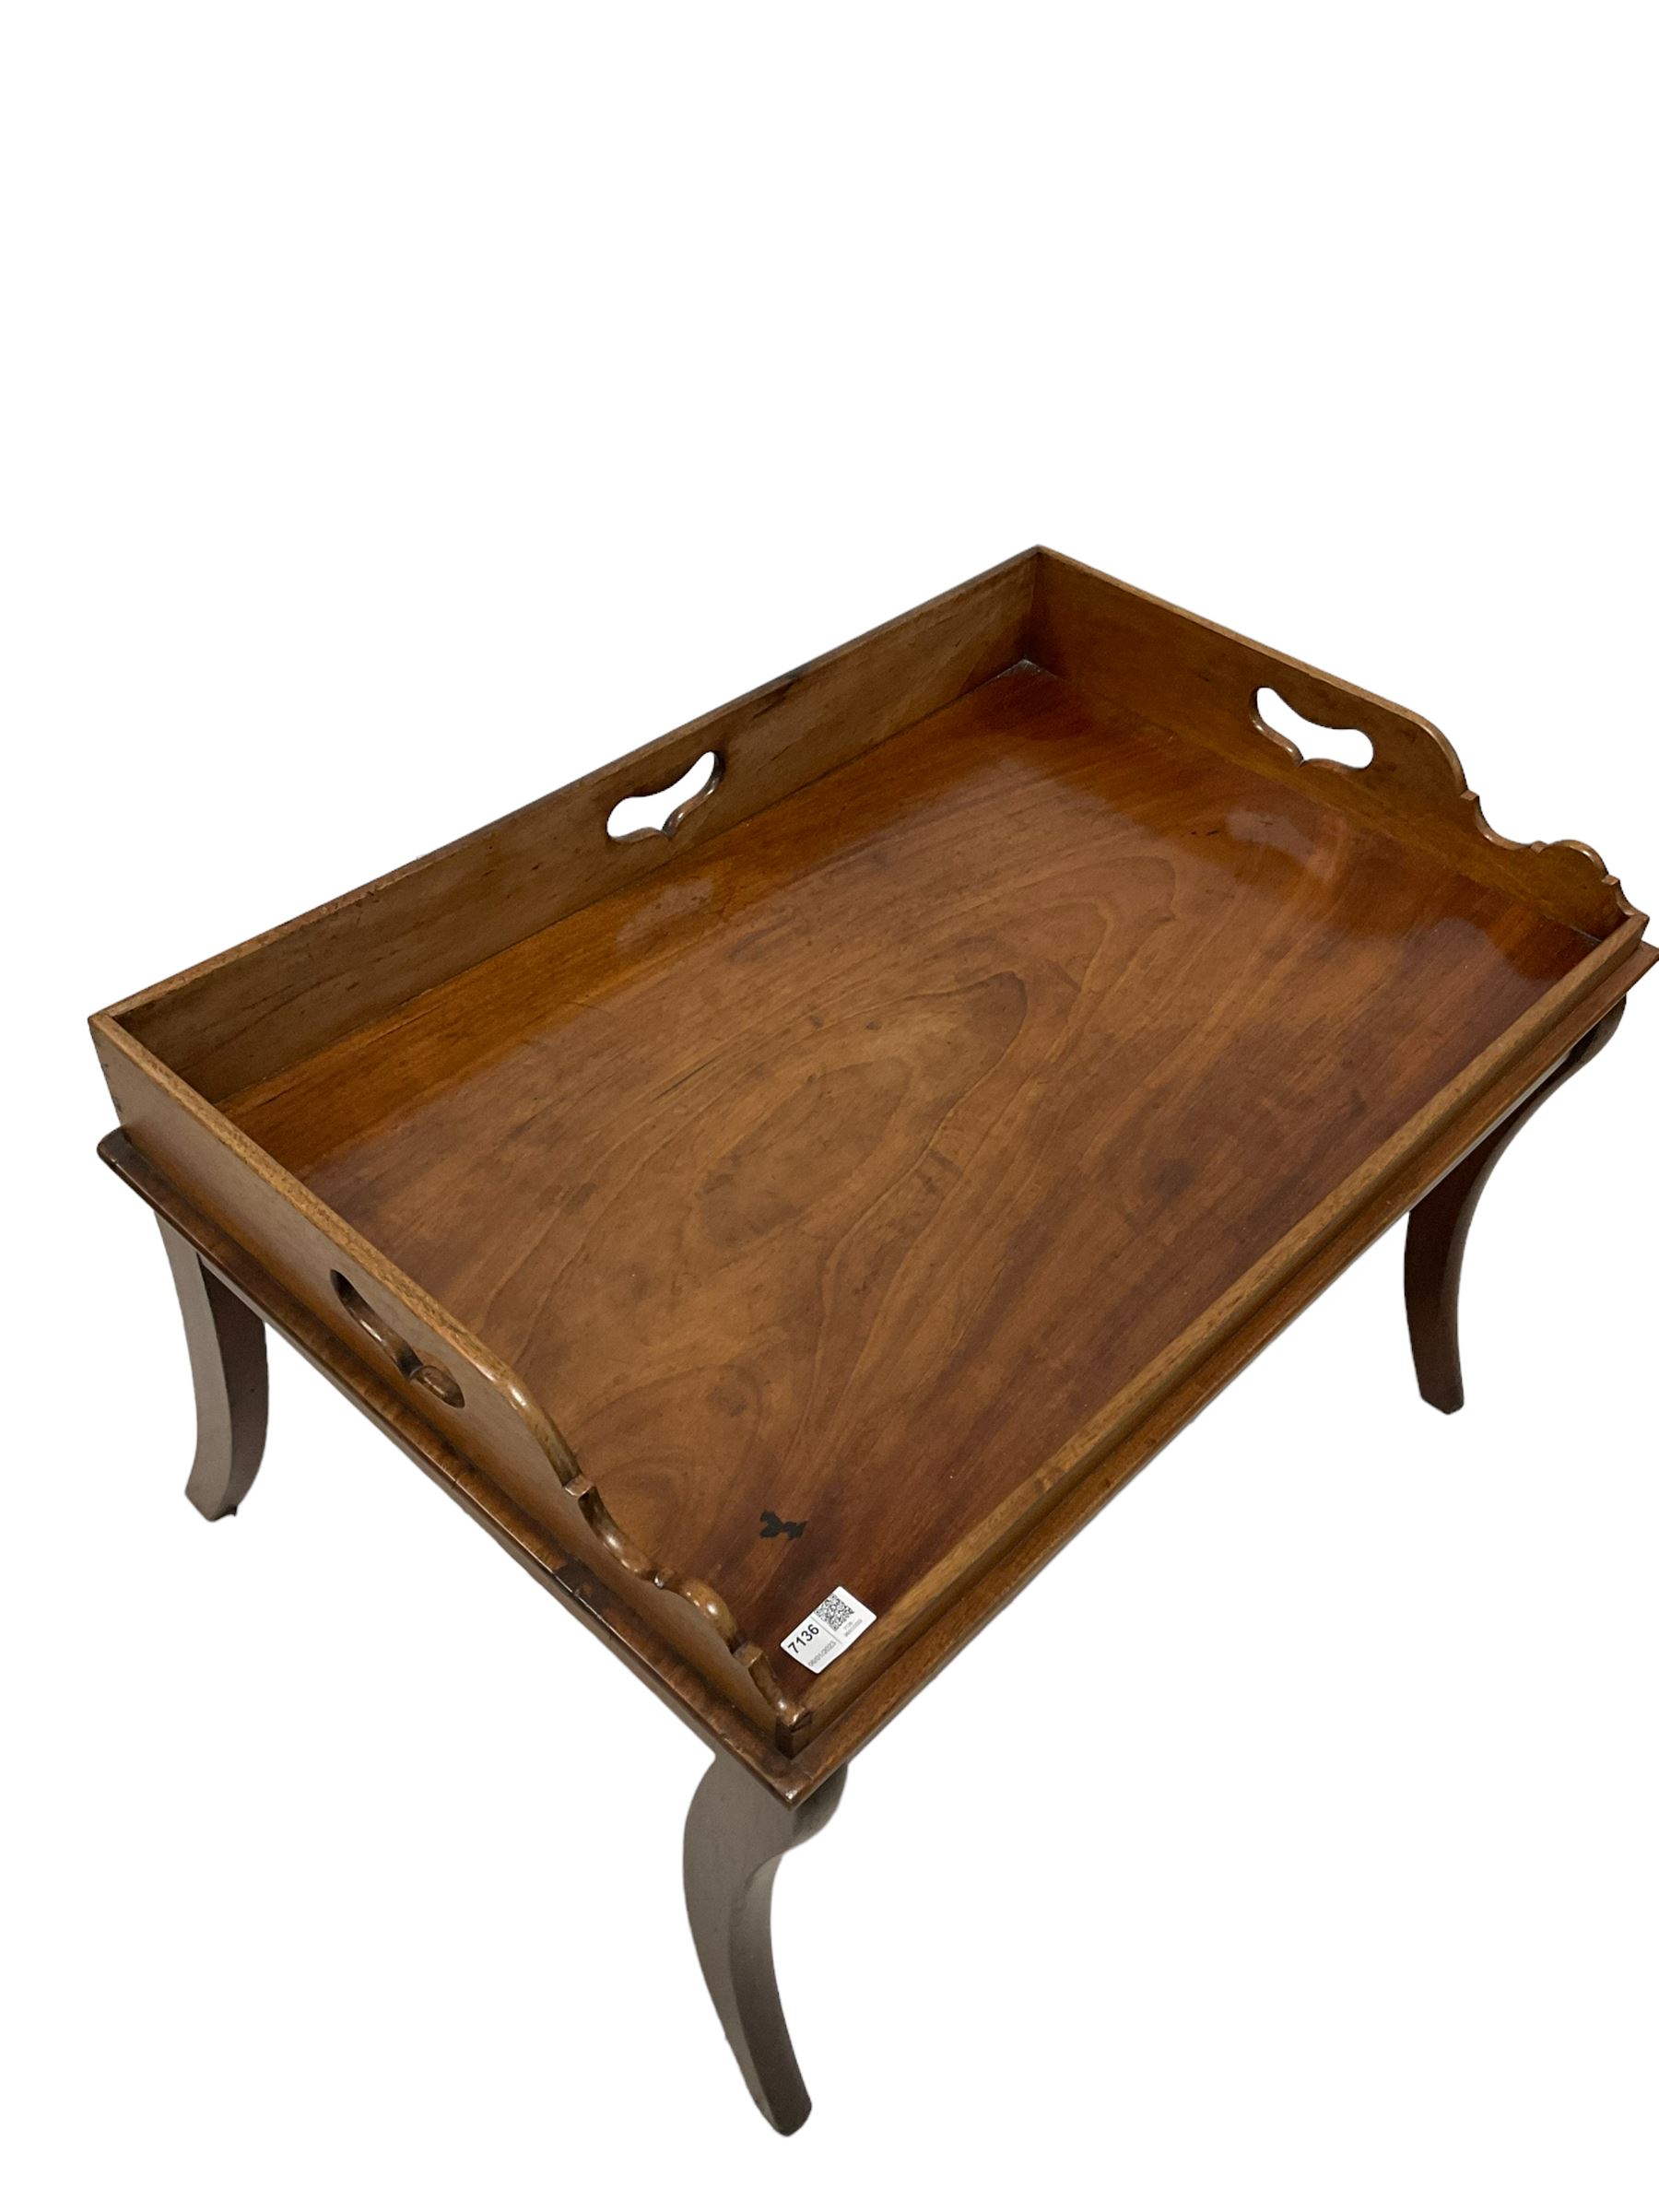 Mahogany tray-top coffee table - Image 3 of 3